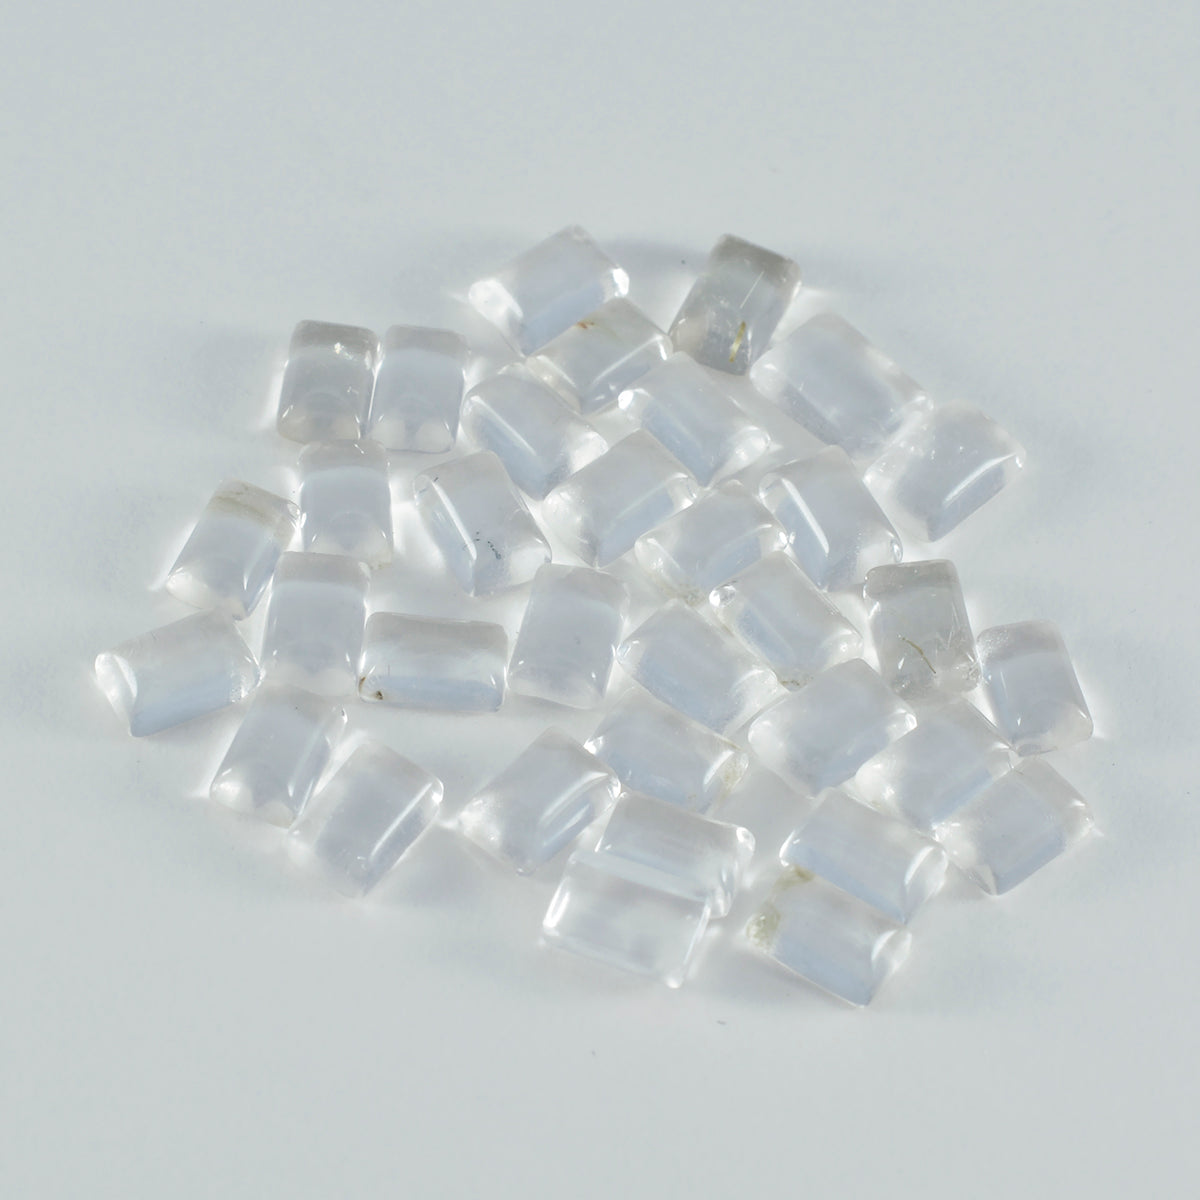 Riyogems 1PC White Crystal Quartz Cabochon 5x7 mm Octagon Shape pretty Quality Gems